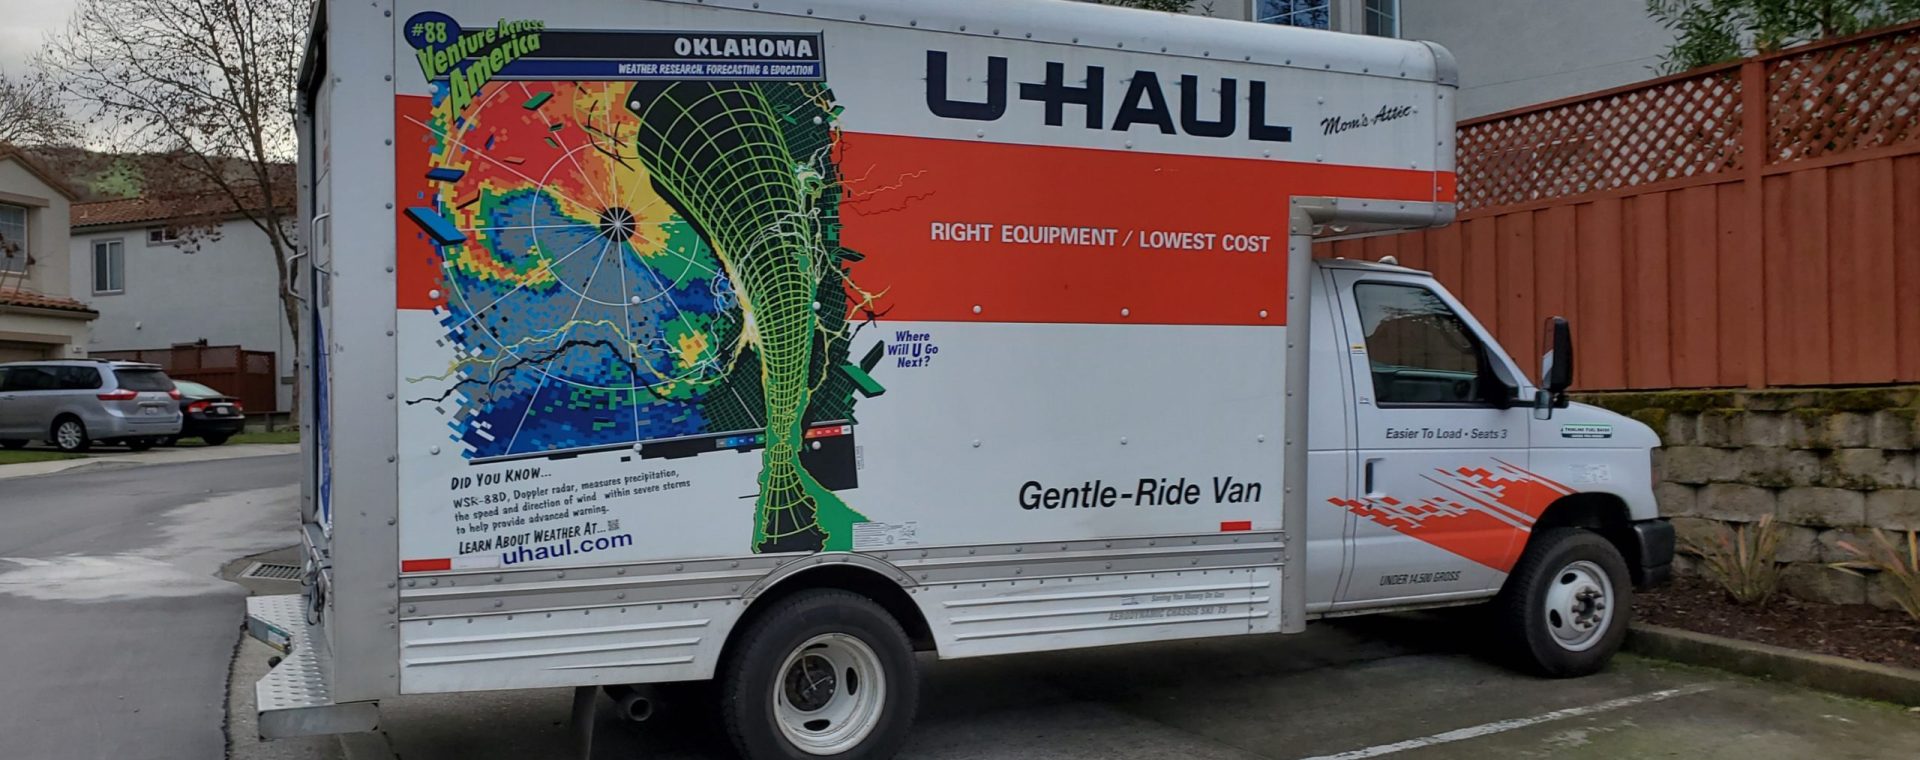 A U-Haul box truck is seen parked in a residential neighborhood.